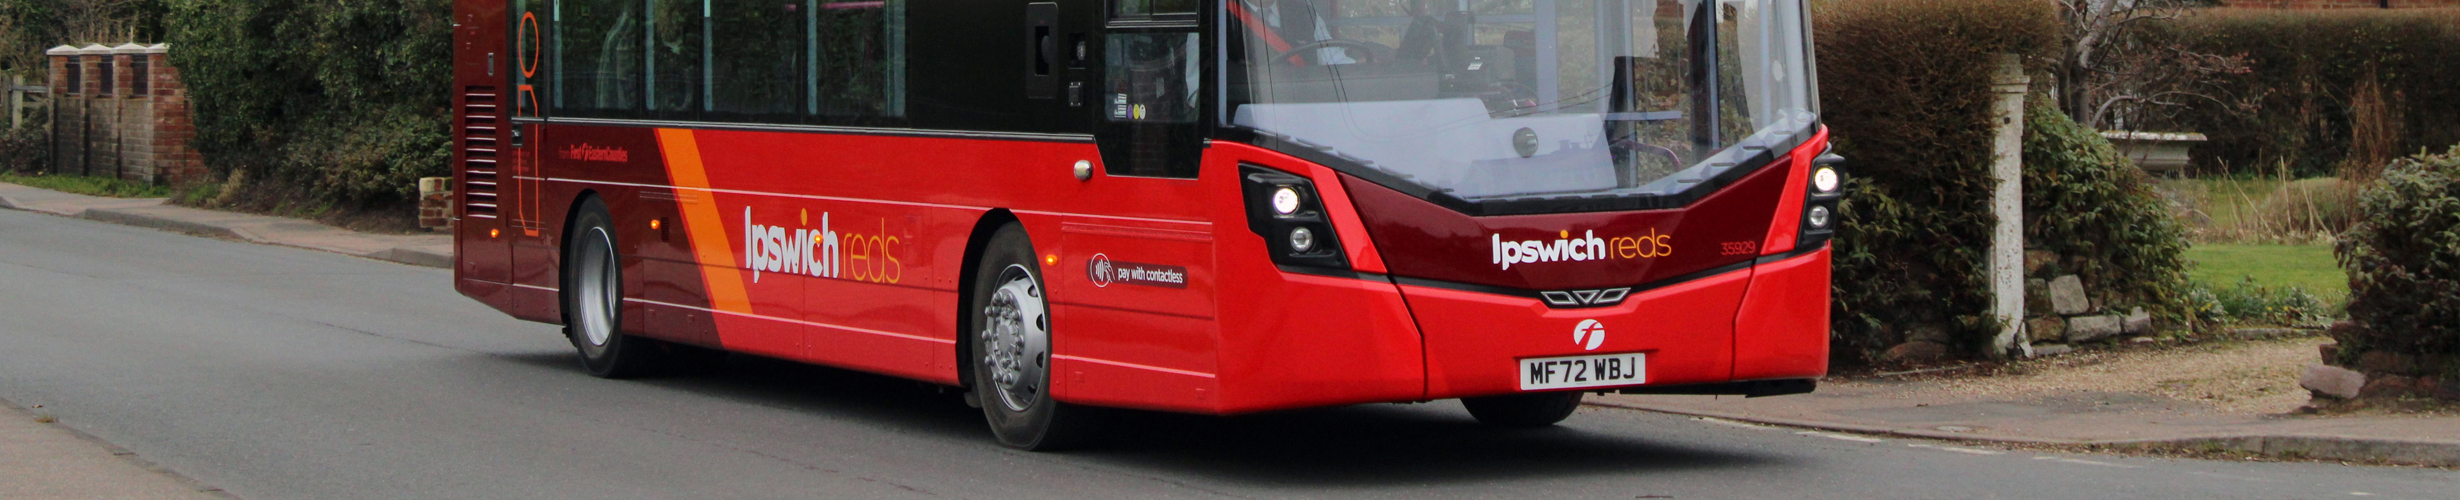 bus journey planner norwich